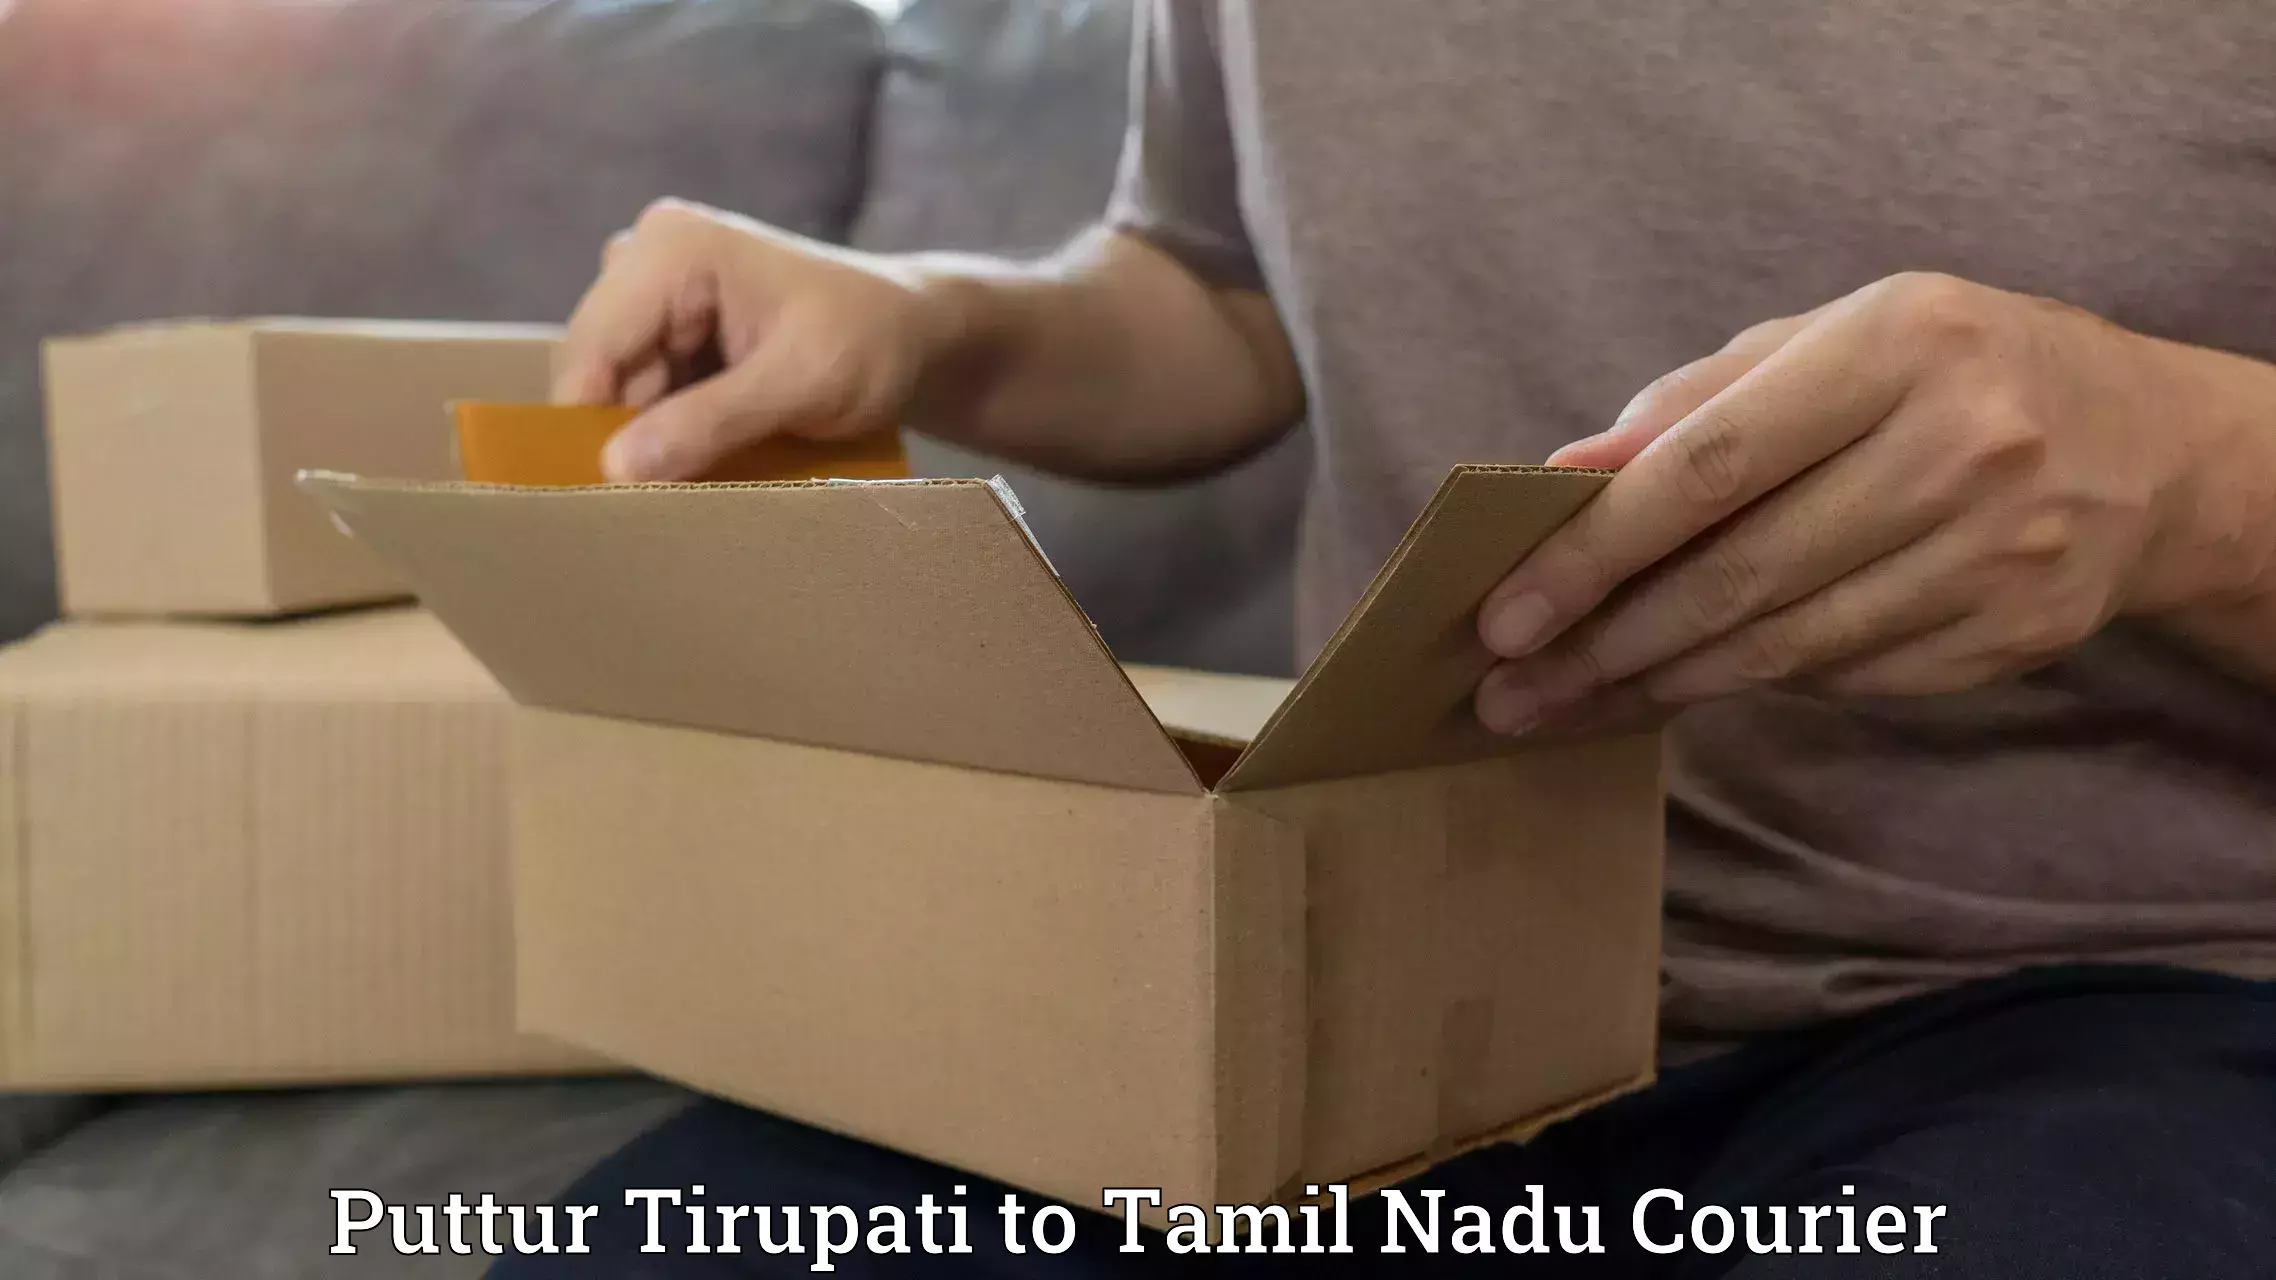 Efficient shipping platforms Puttur Tirupati to Tamil Nadu